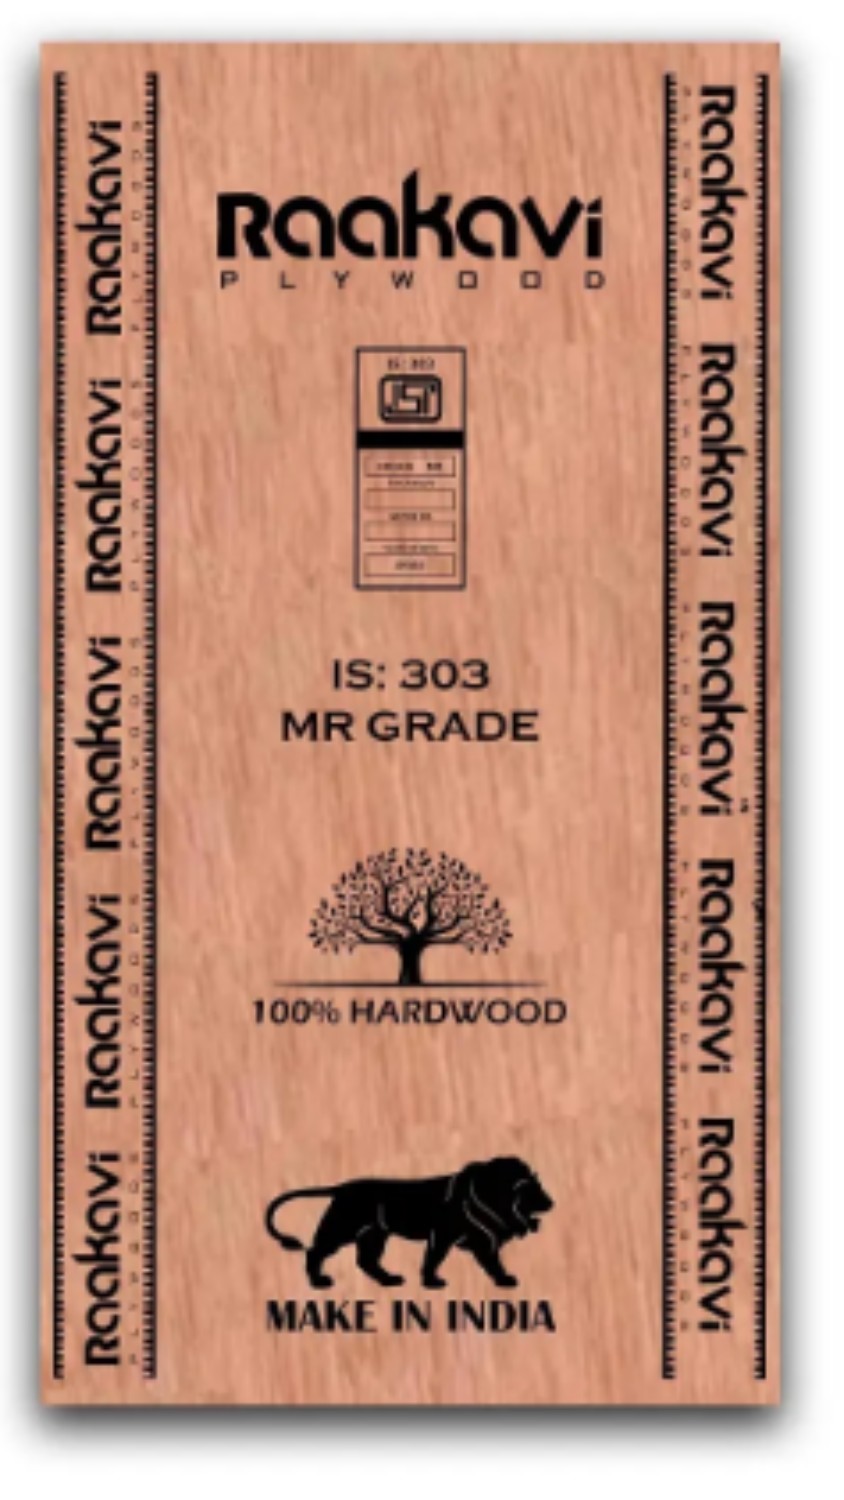 Raakavi 12 mm Marine Grade Plywood 2440 x 1220 mm IS 303_0